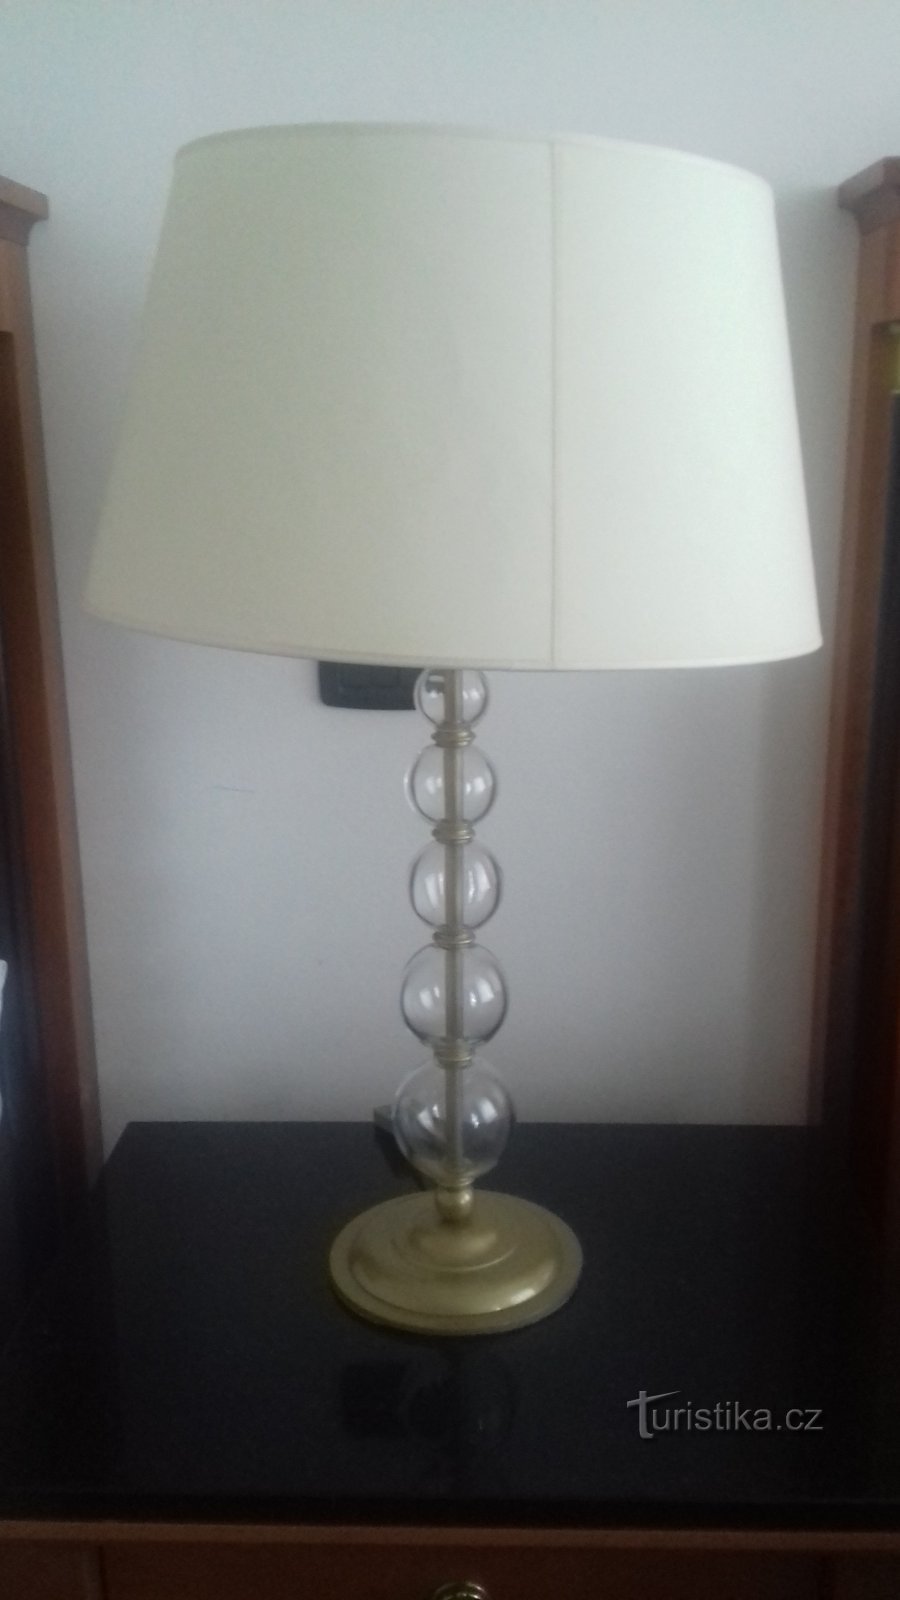 Настільна лампа в кімнату - цікавий постамент